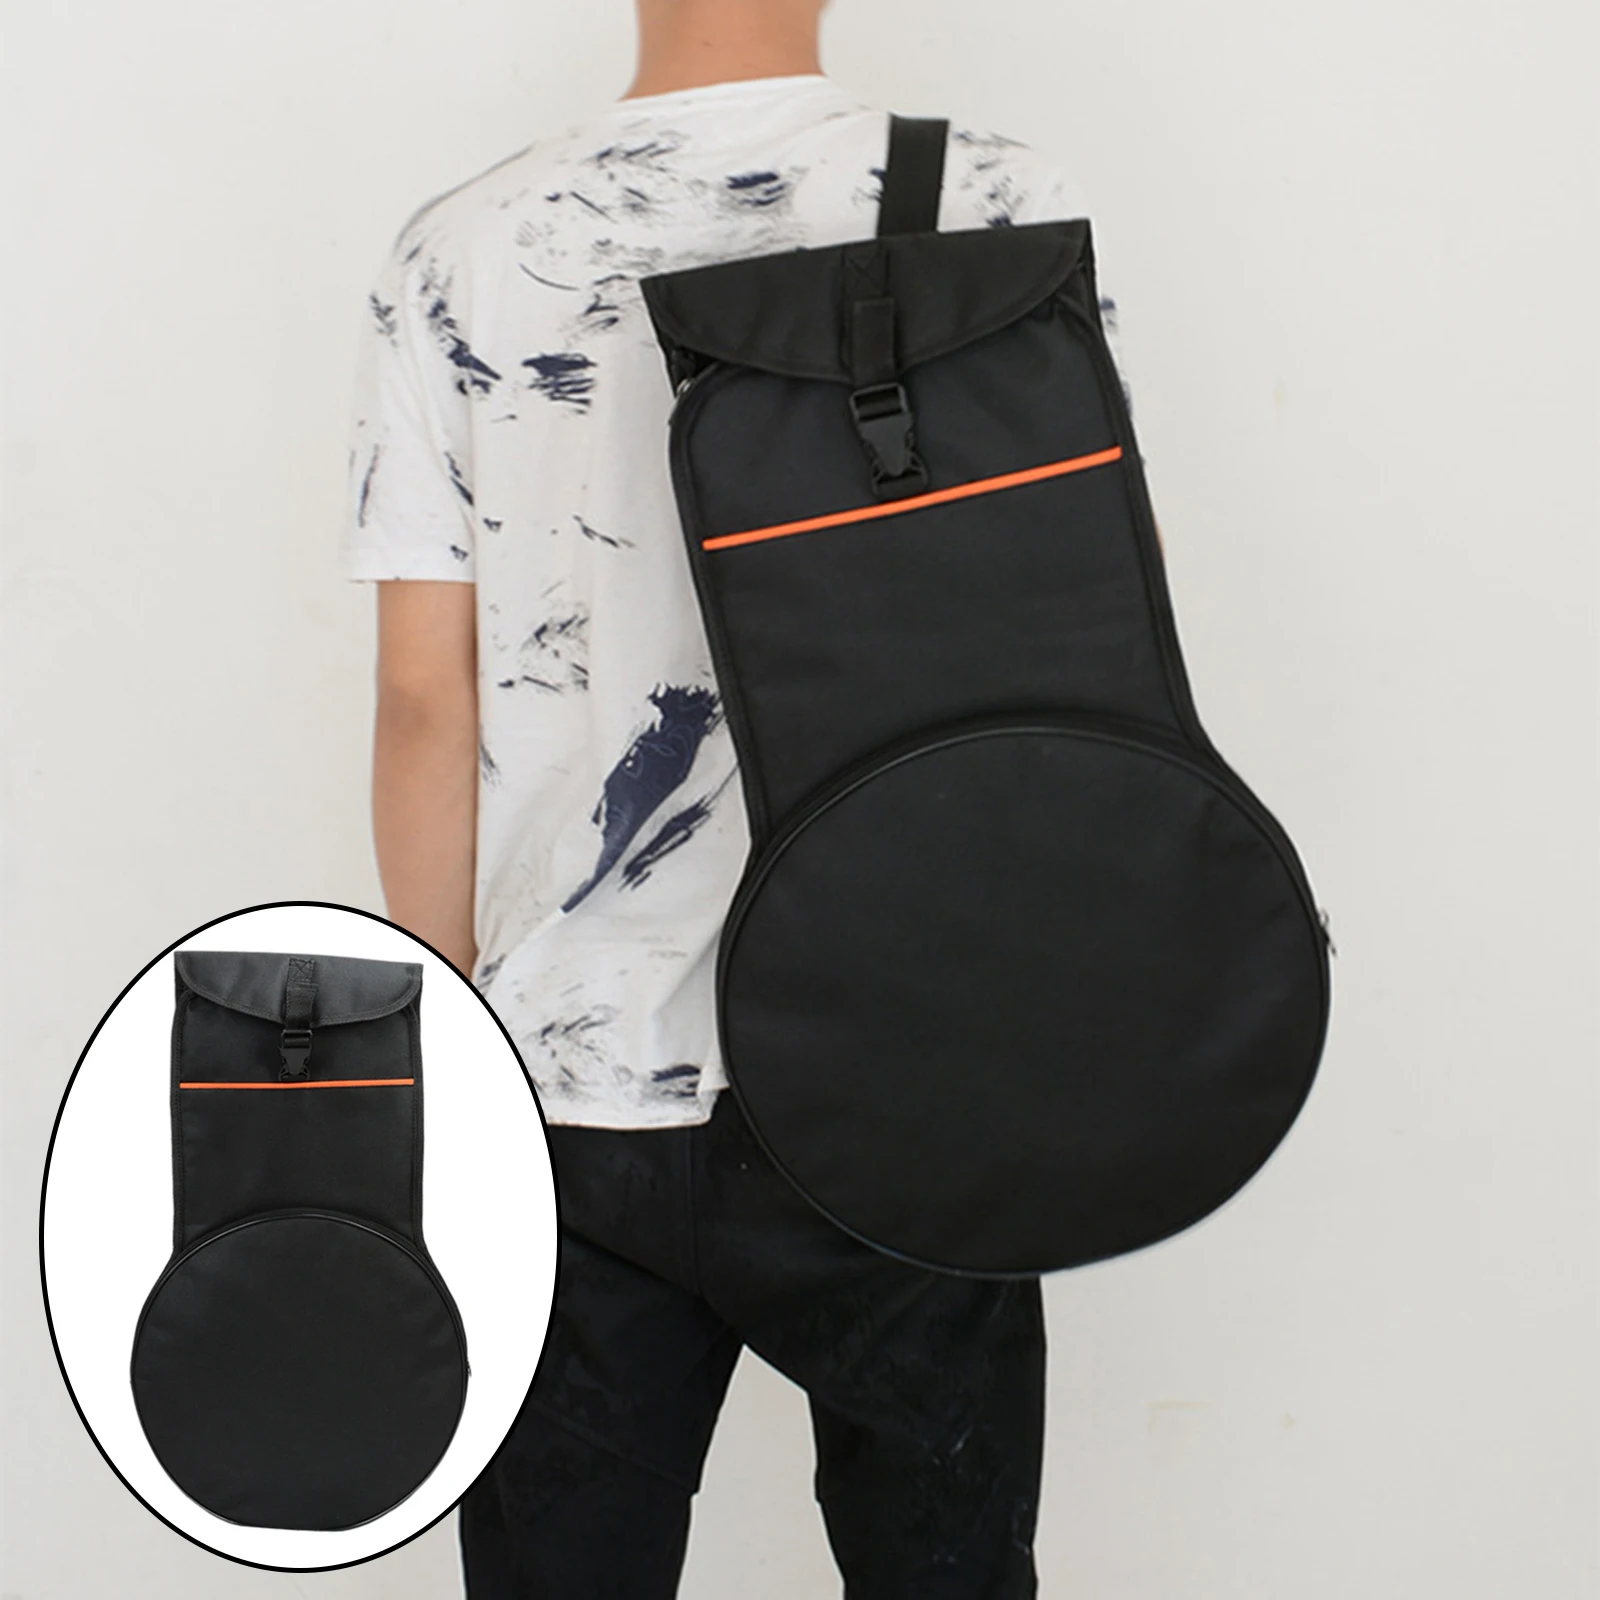 Oxford Cloth 12 Inch Dumb Drum Bags Drum Pouch Storage Bag Shoulder Bag Partition Design with Zipper Wear-resistant Accessories